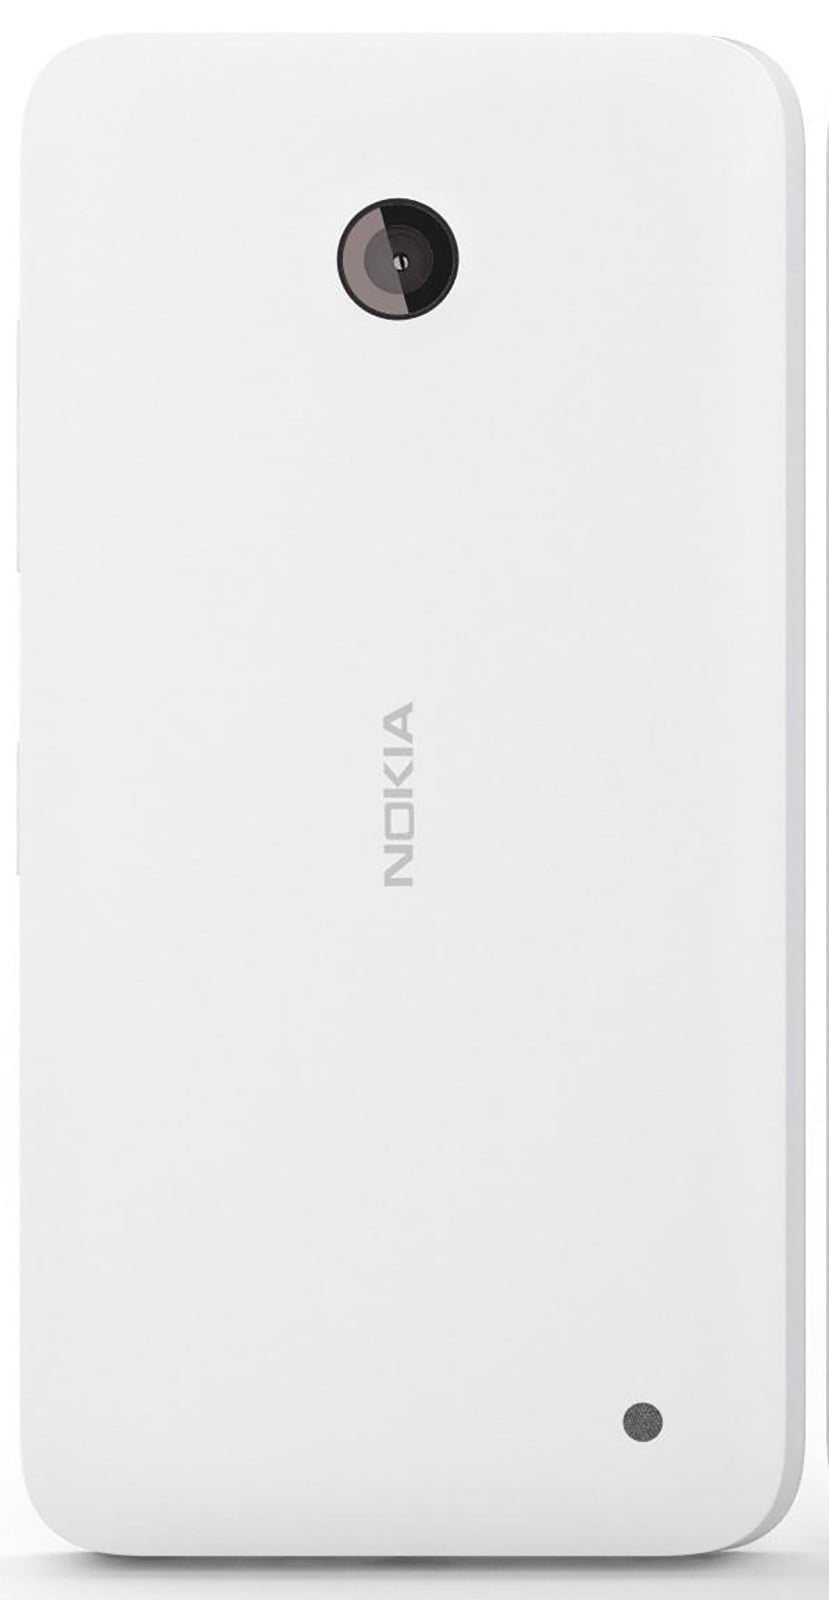 Ster Moreel onderwijs Piepen Nokia Lumia 635 RM-975 AT&T Unlocked Windows Phone - White - Walmart.com